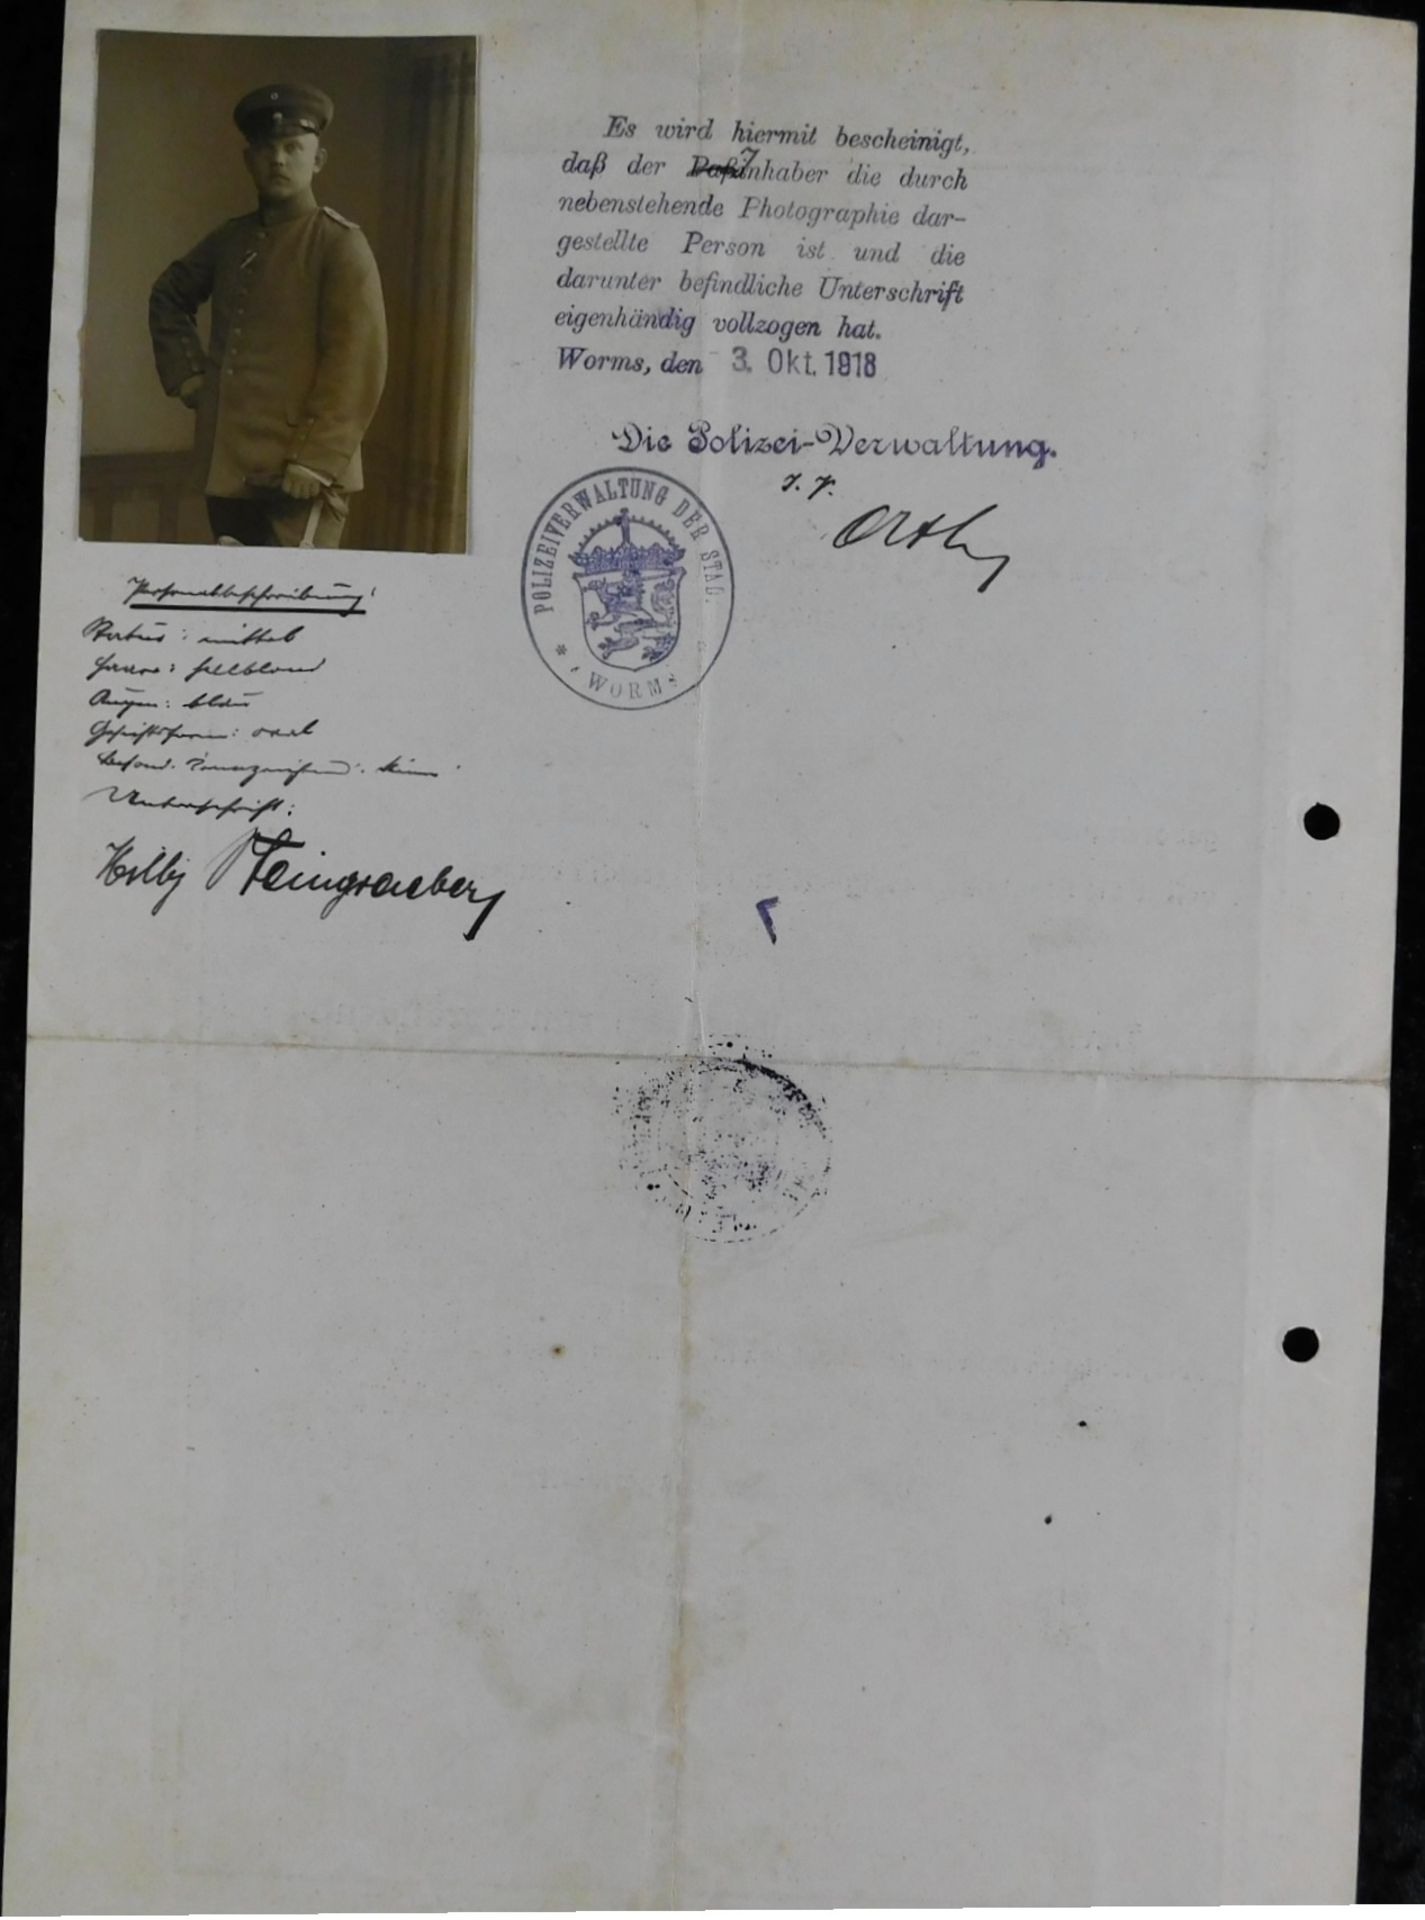 Staatsangehörigkeitsausweis, Preußen 1918 - Image 3 of 3